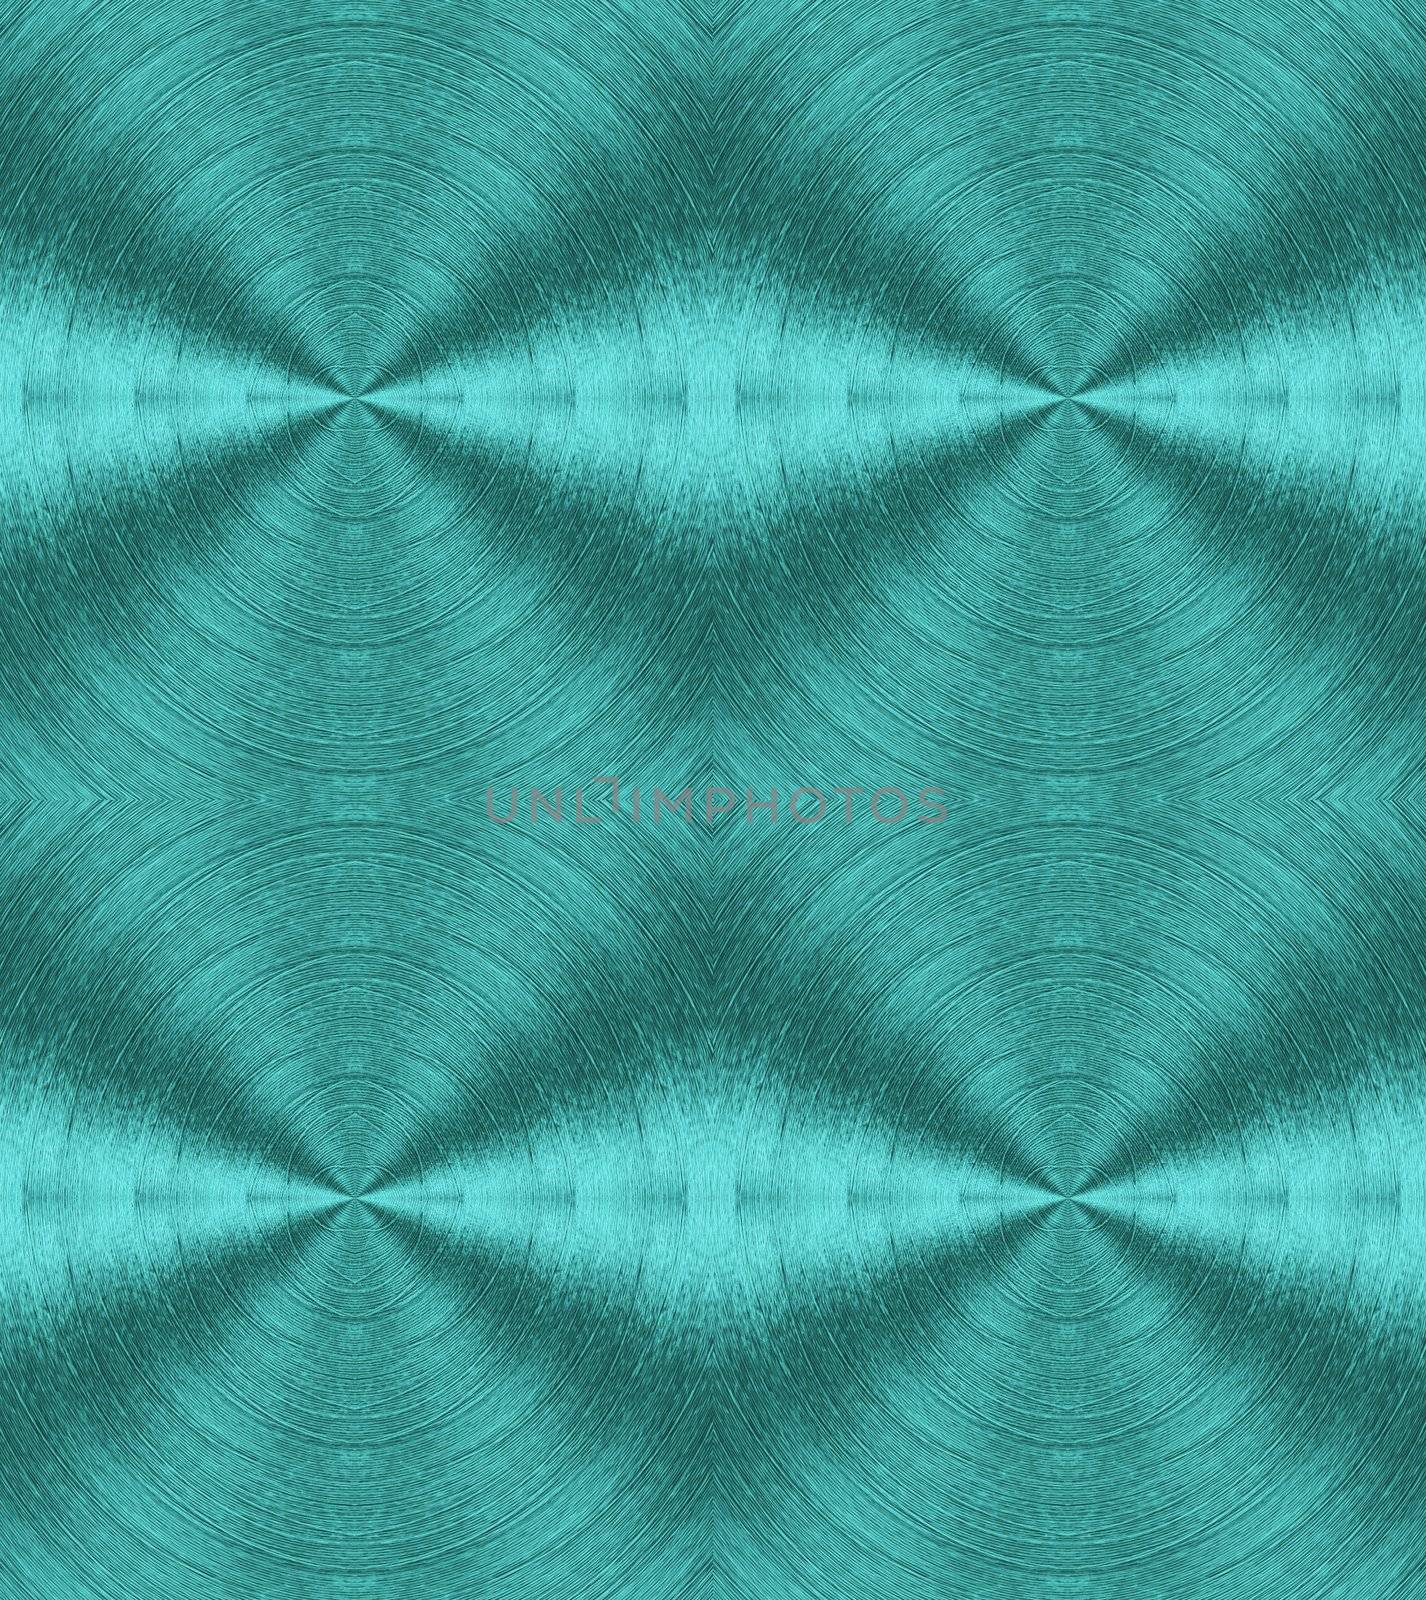 green-blue patterns made of yarn